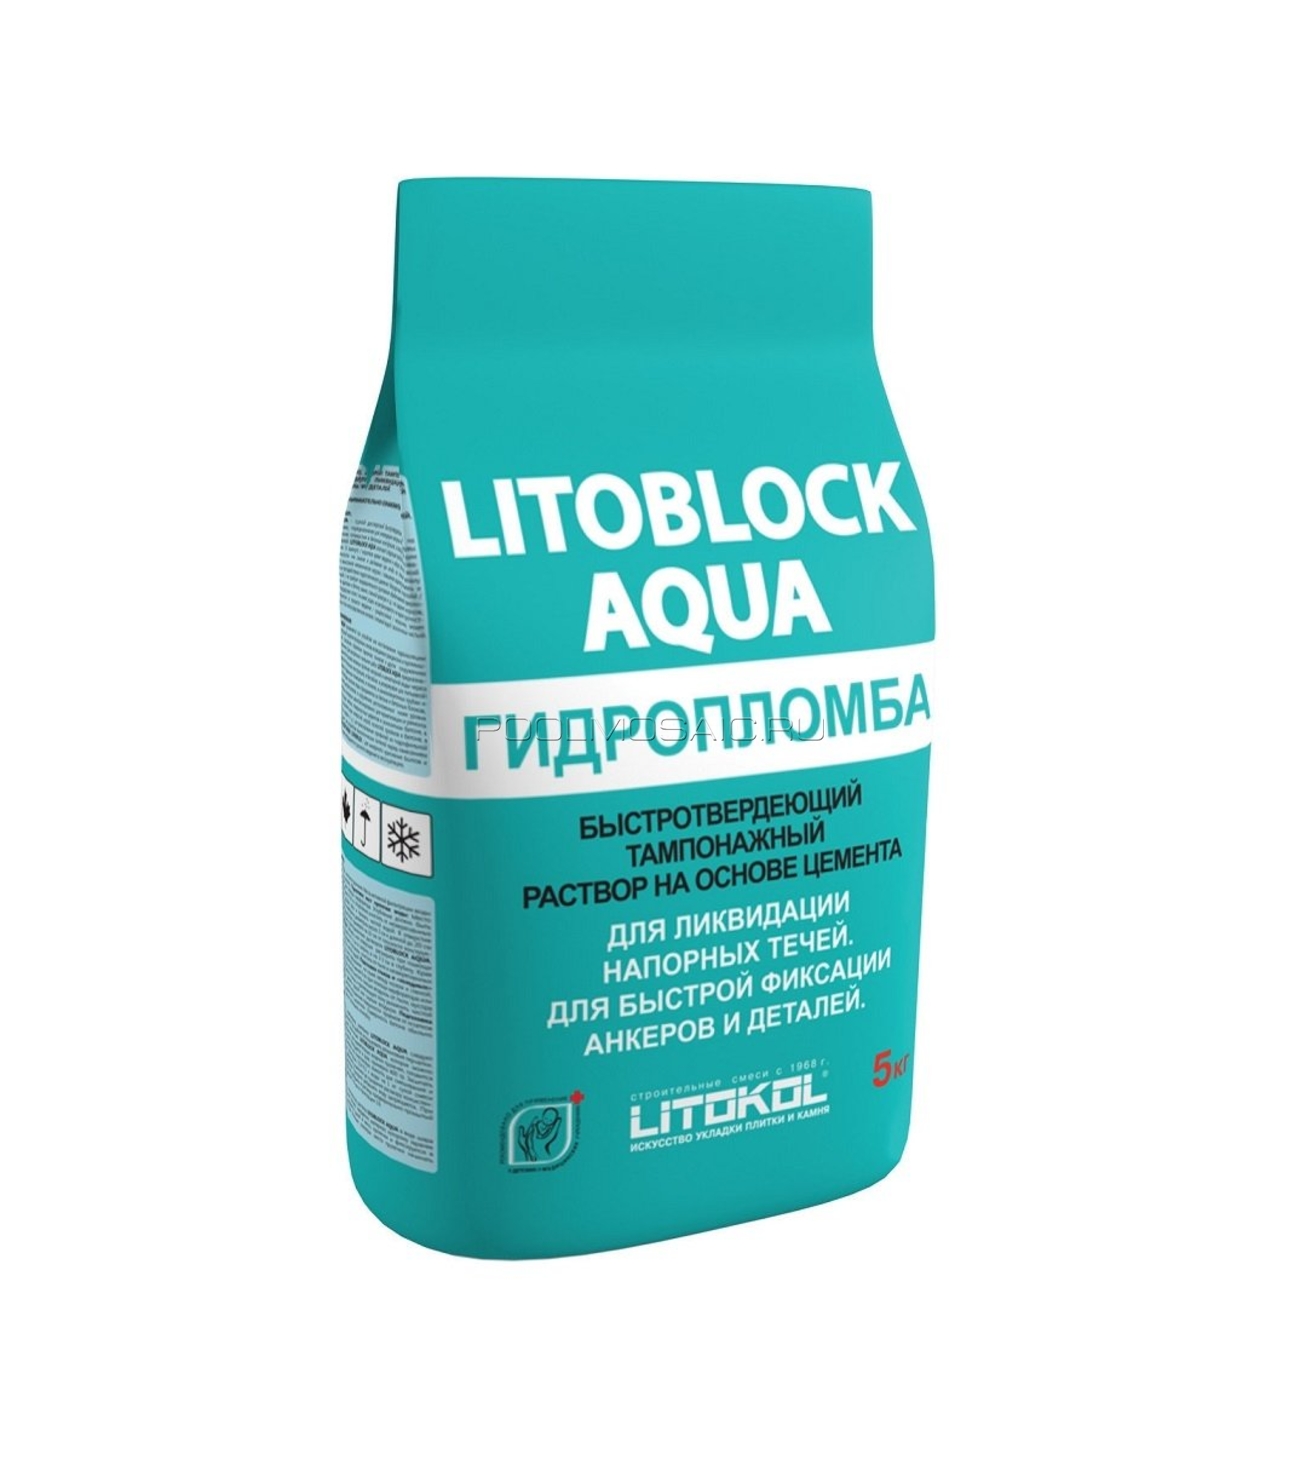 Гидроизоляция литокол. LITOBLOCK Aqua гидропломба (5kg al.Bag). Гидропломба Литокол. Гидропломба Литокол для бетона. Гидропломба Боларс 0,6кг.